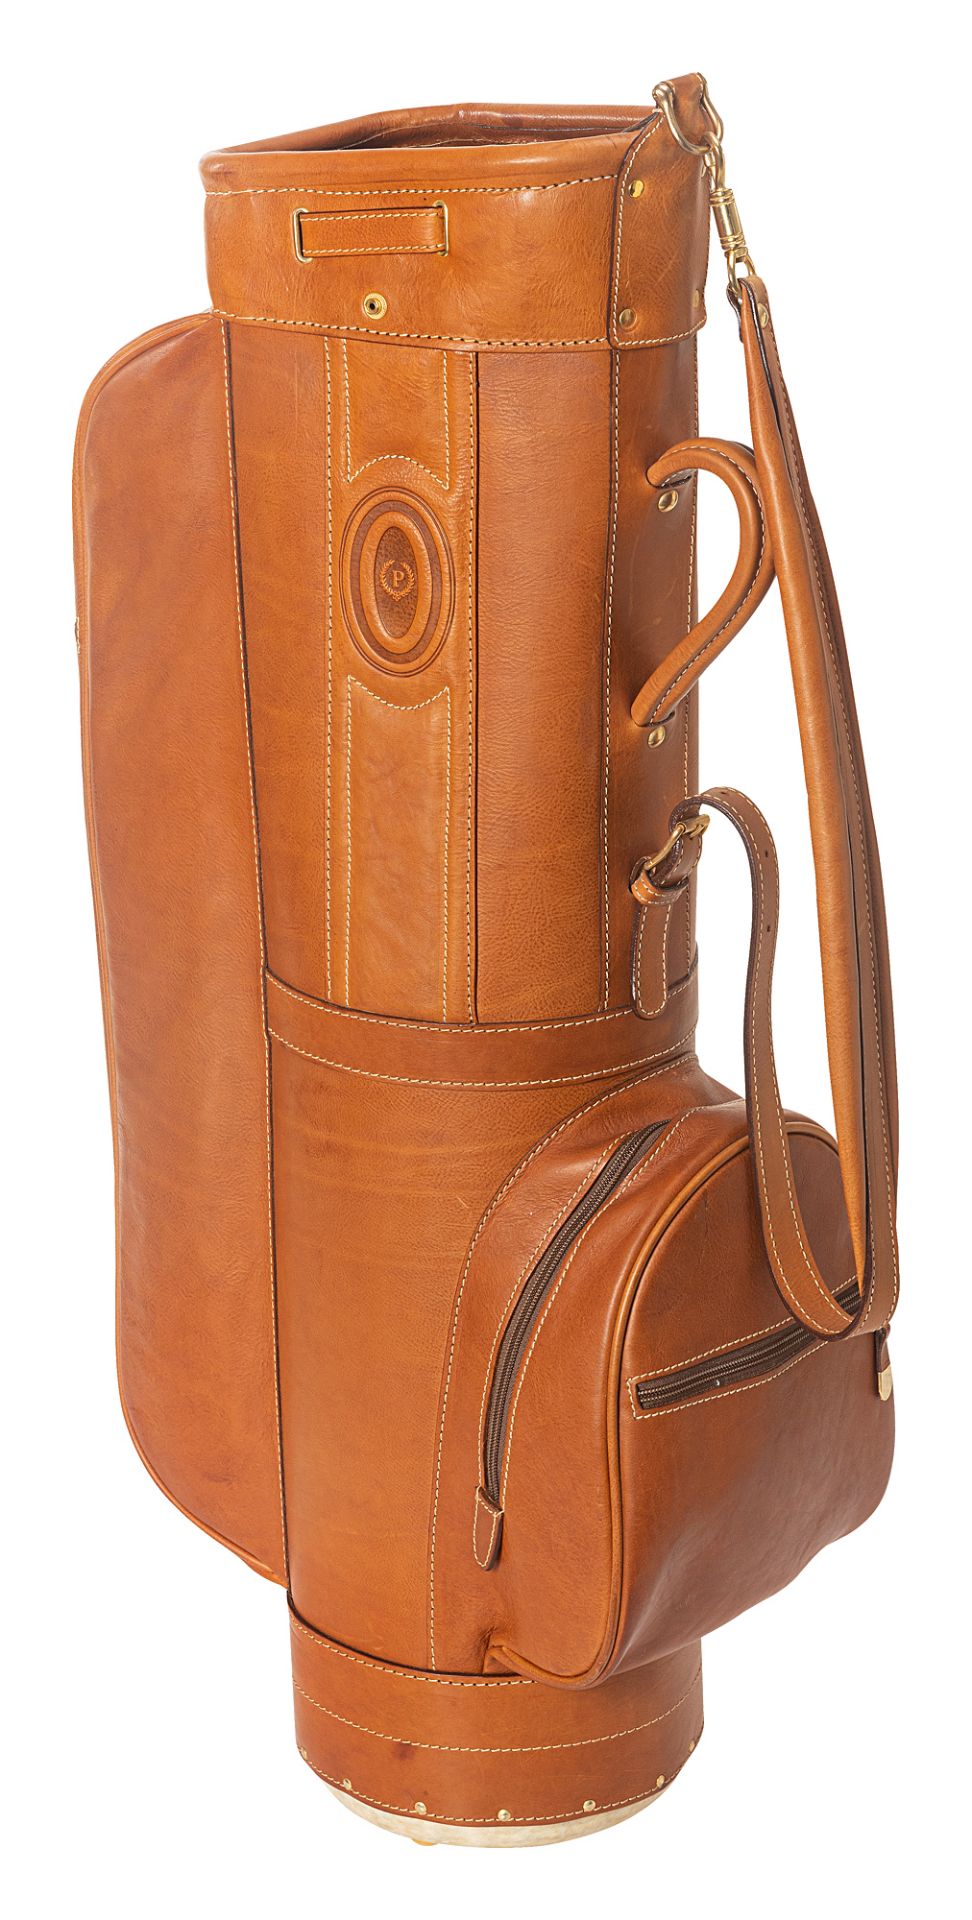 Pollini vintage leather golf bag - Image 2 of 4